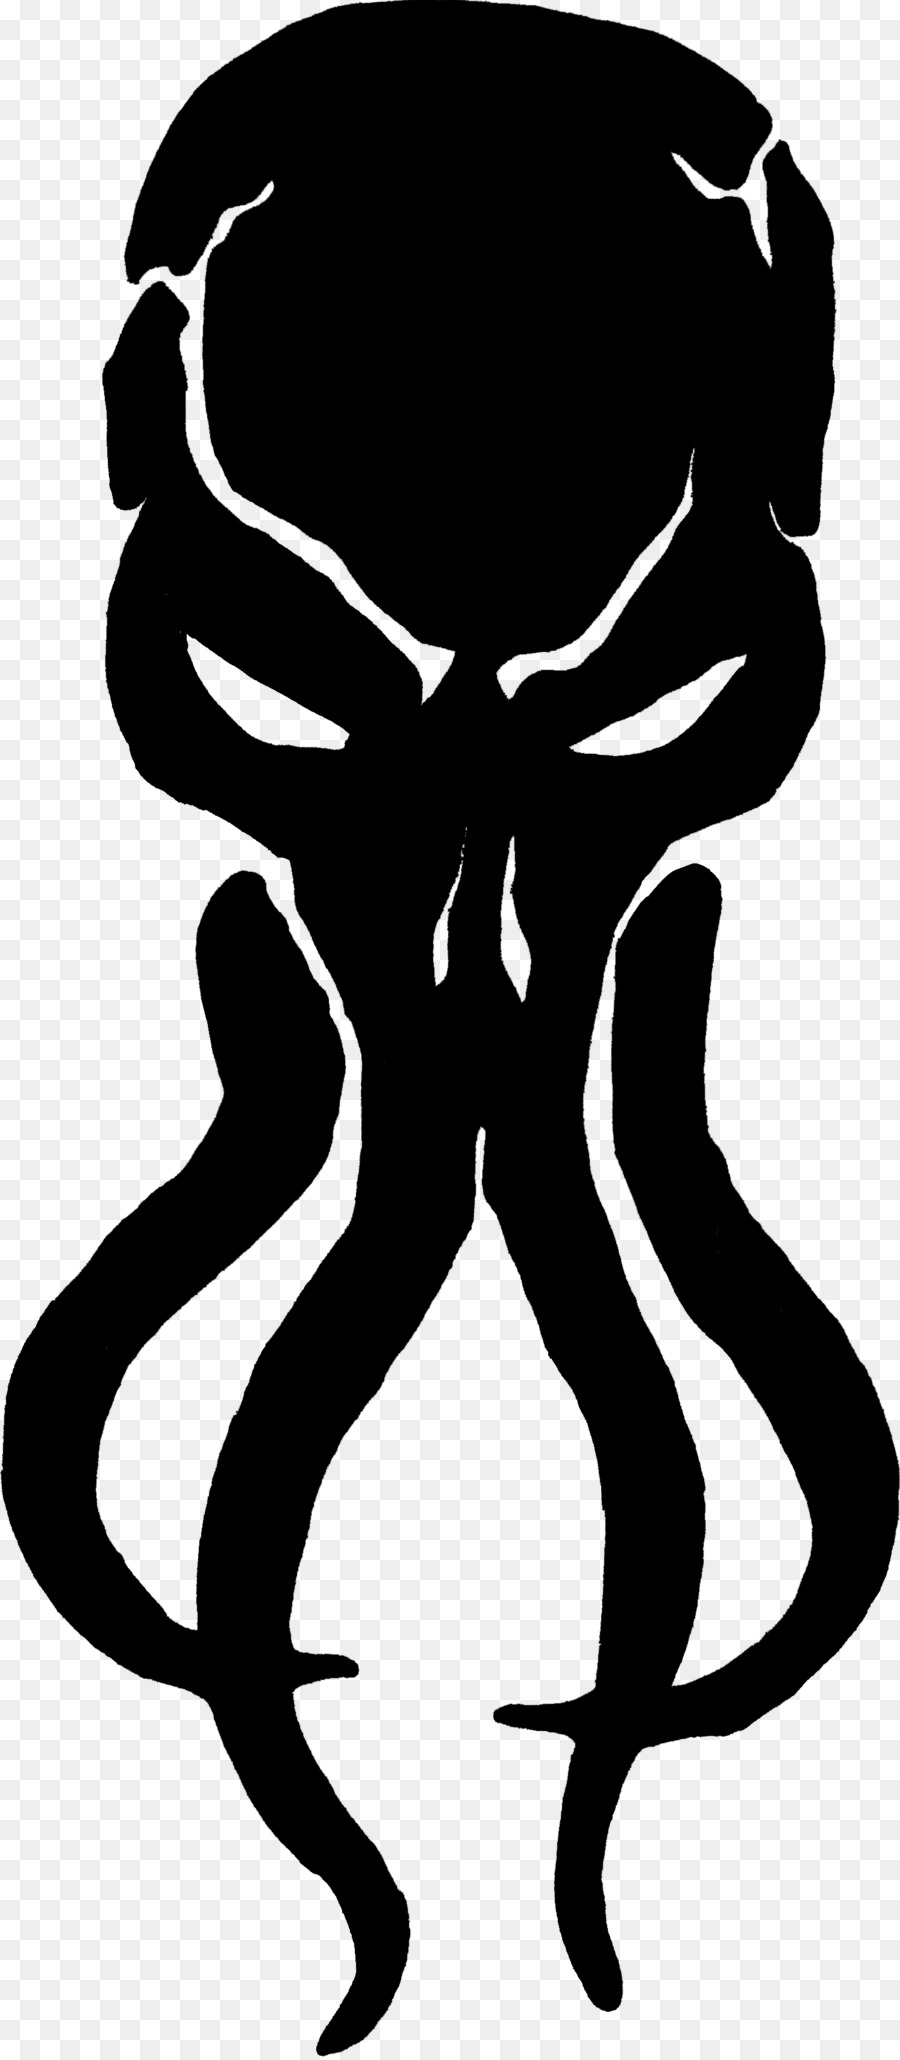 Kraken Rum Tattoo Octopus Decal - kraken rum logo png download - 500*667 -  Free Transparent Kraken png Download. - Clip Art Library